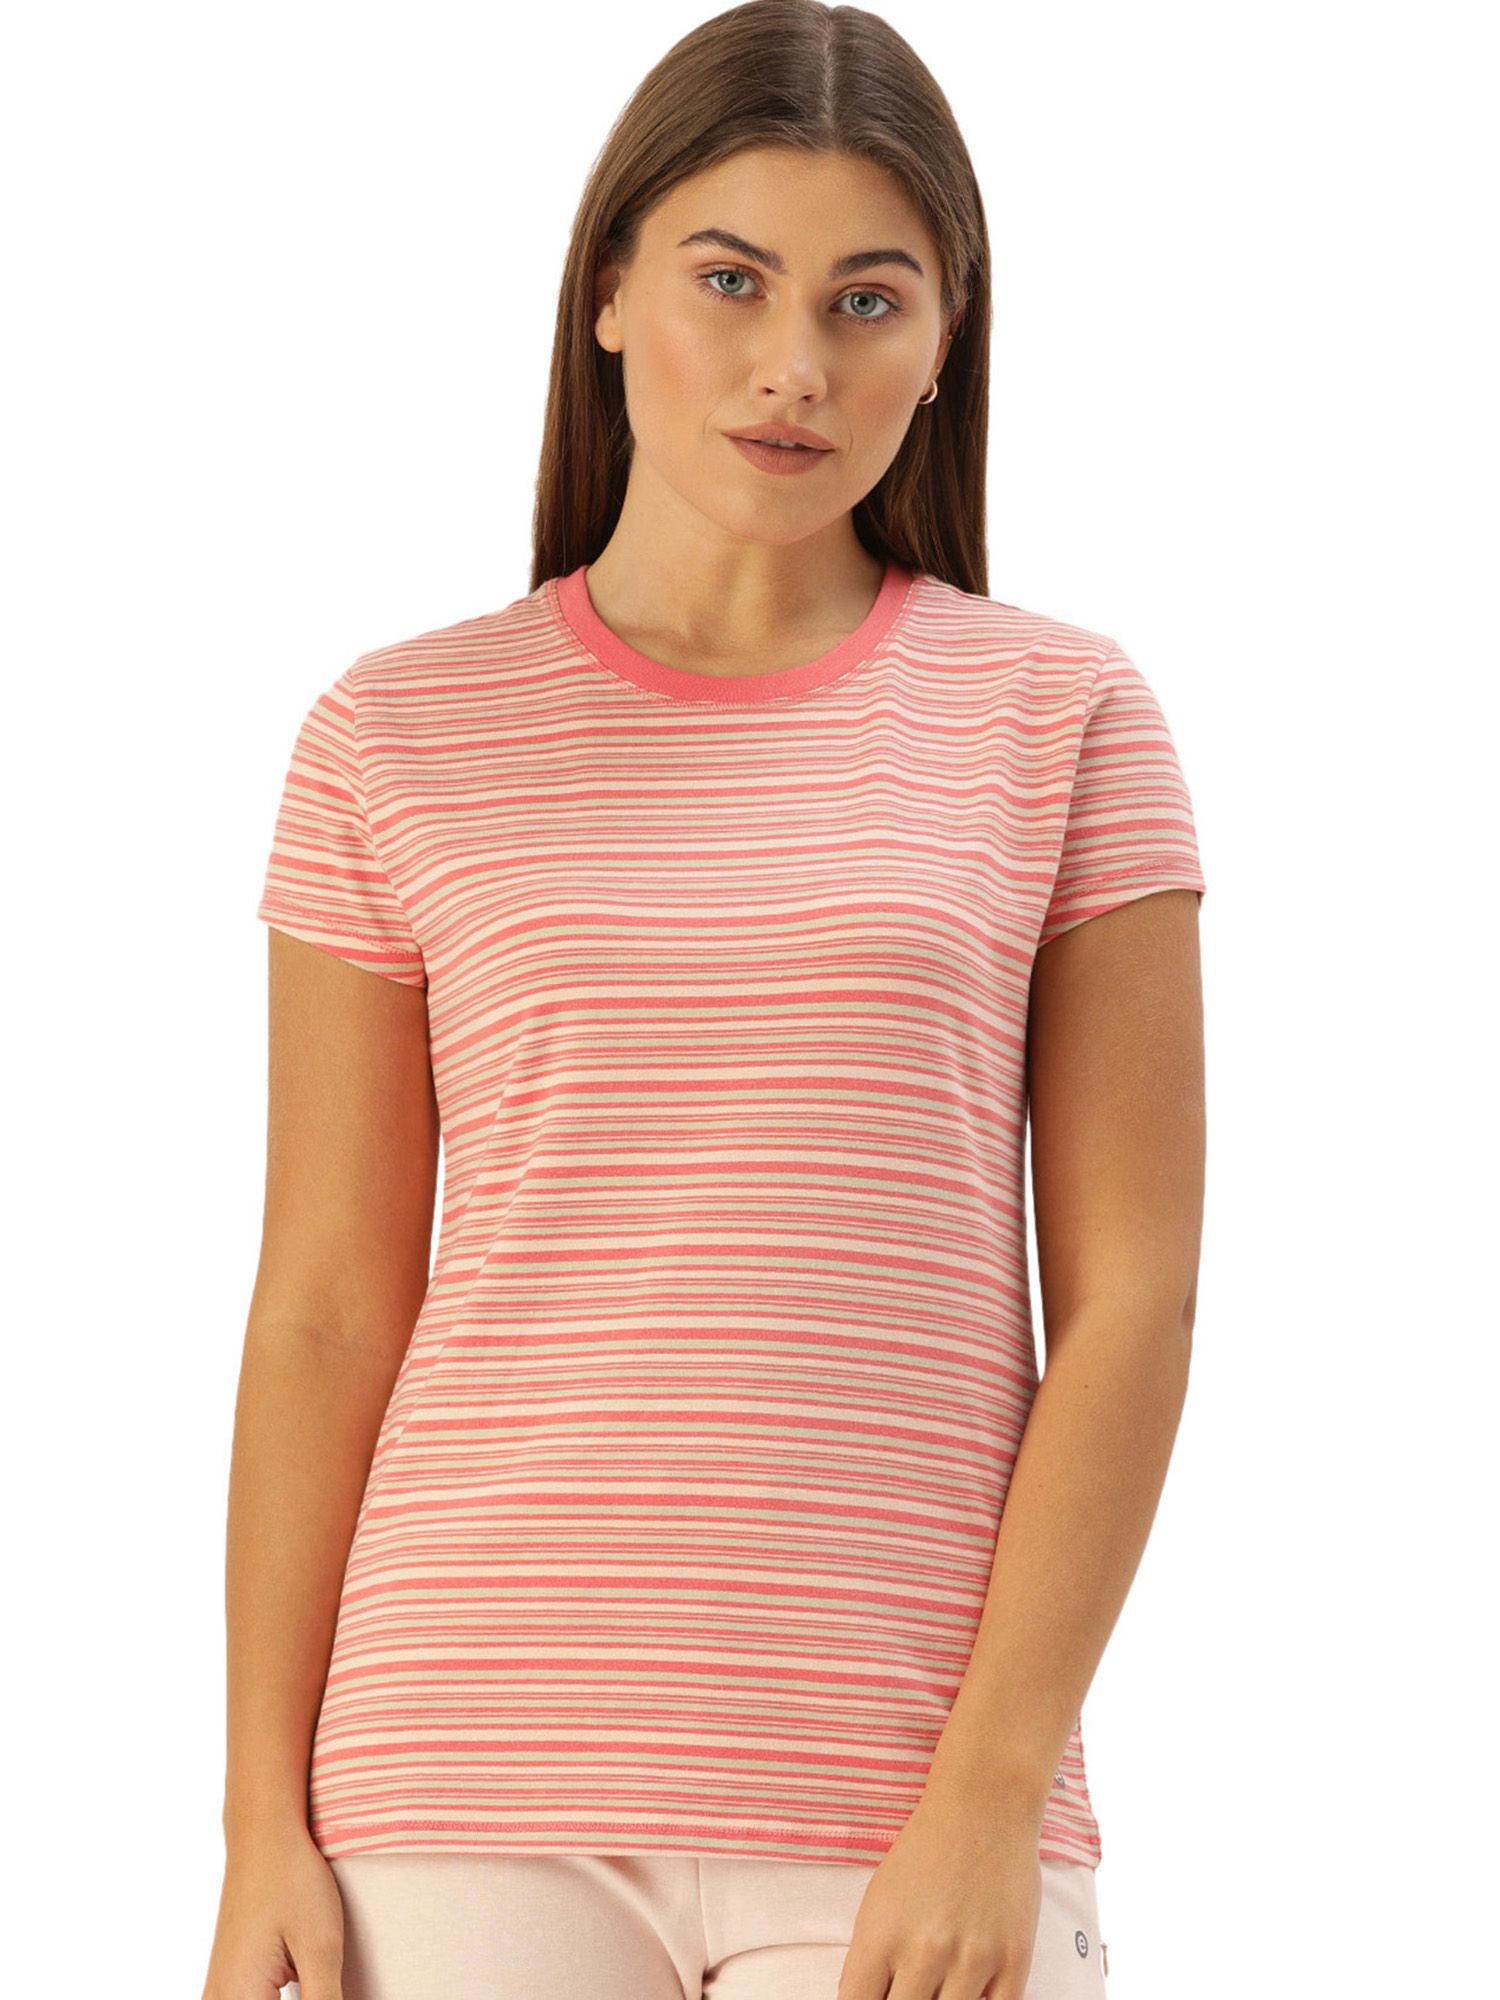 essentials ea47 women's slim fit stretch cotton jersey tee - pink